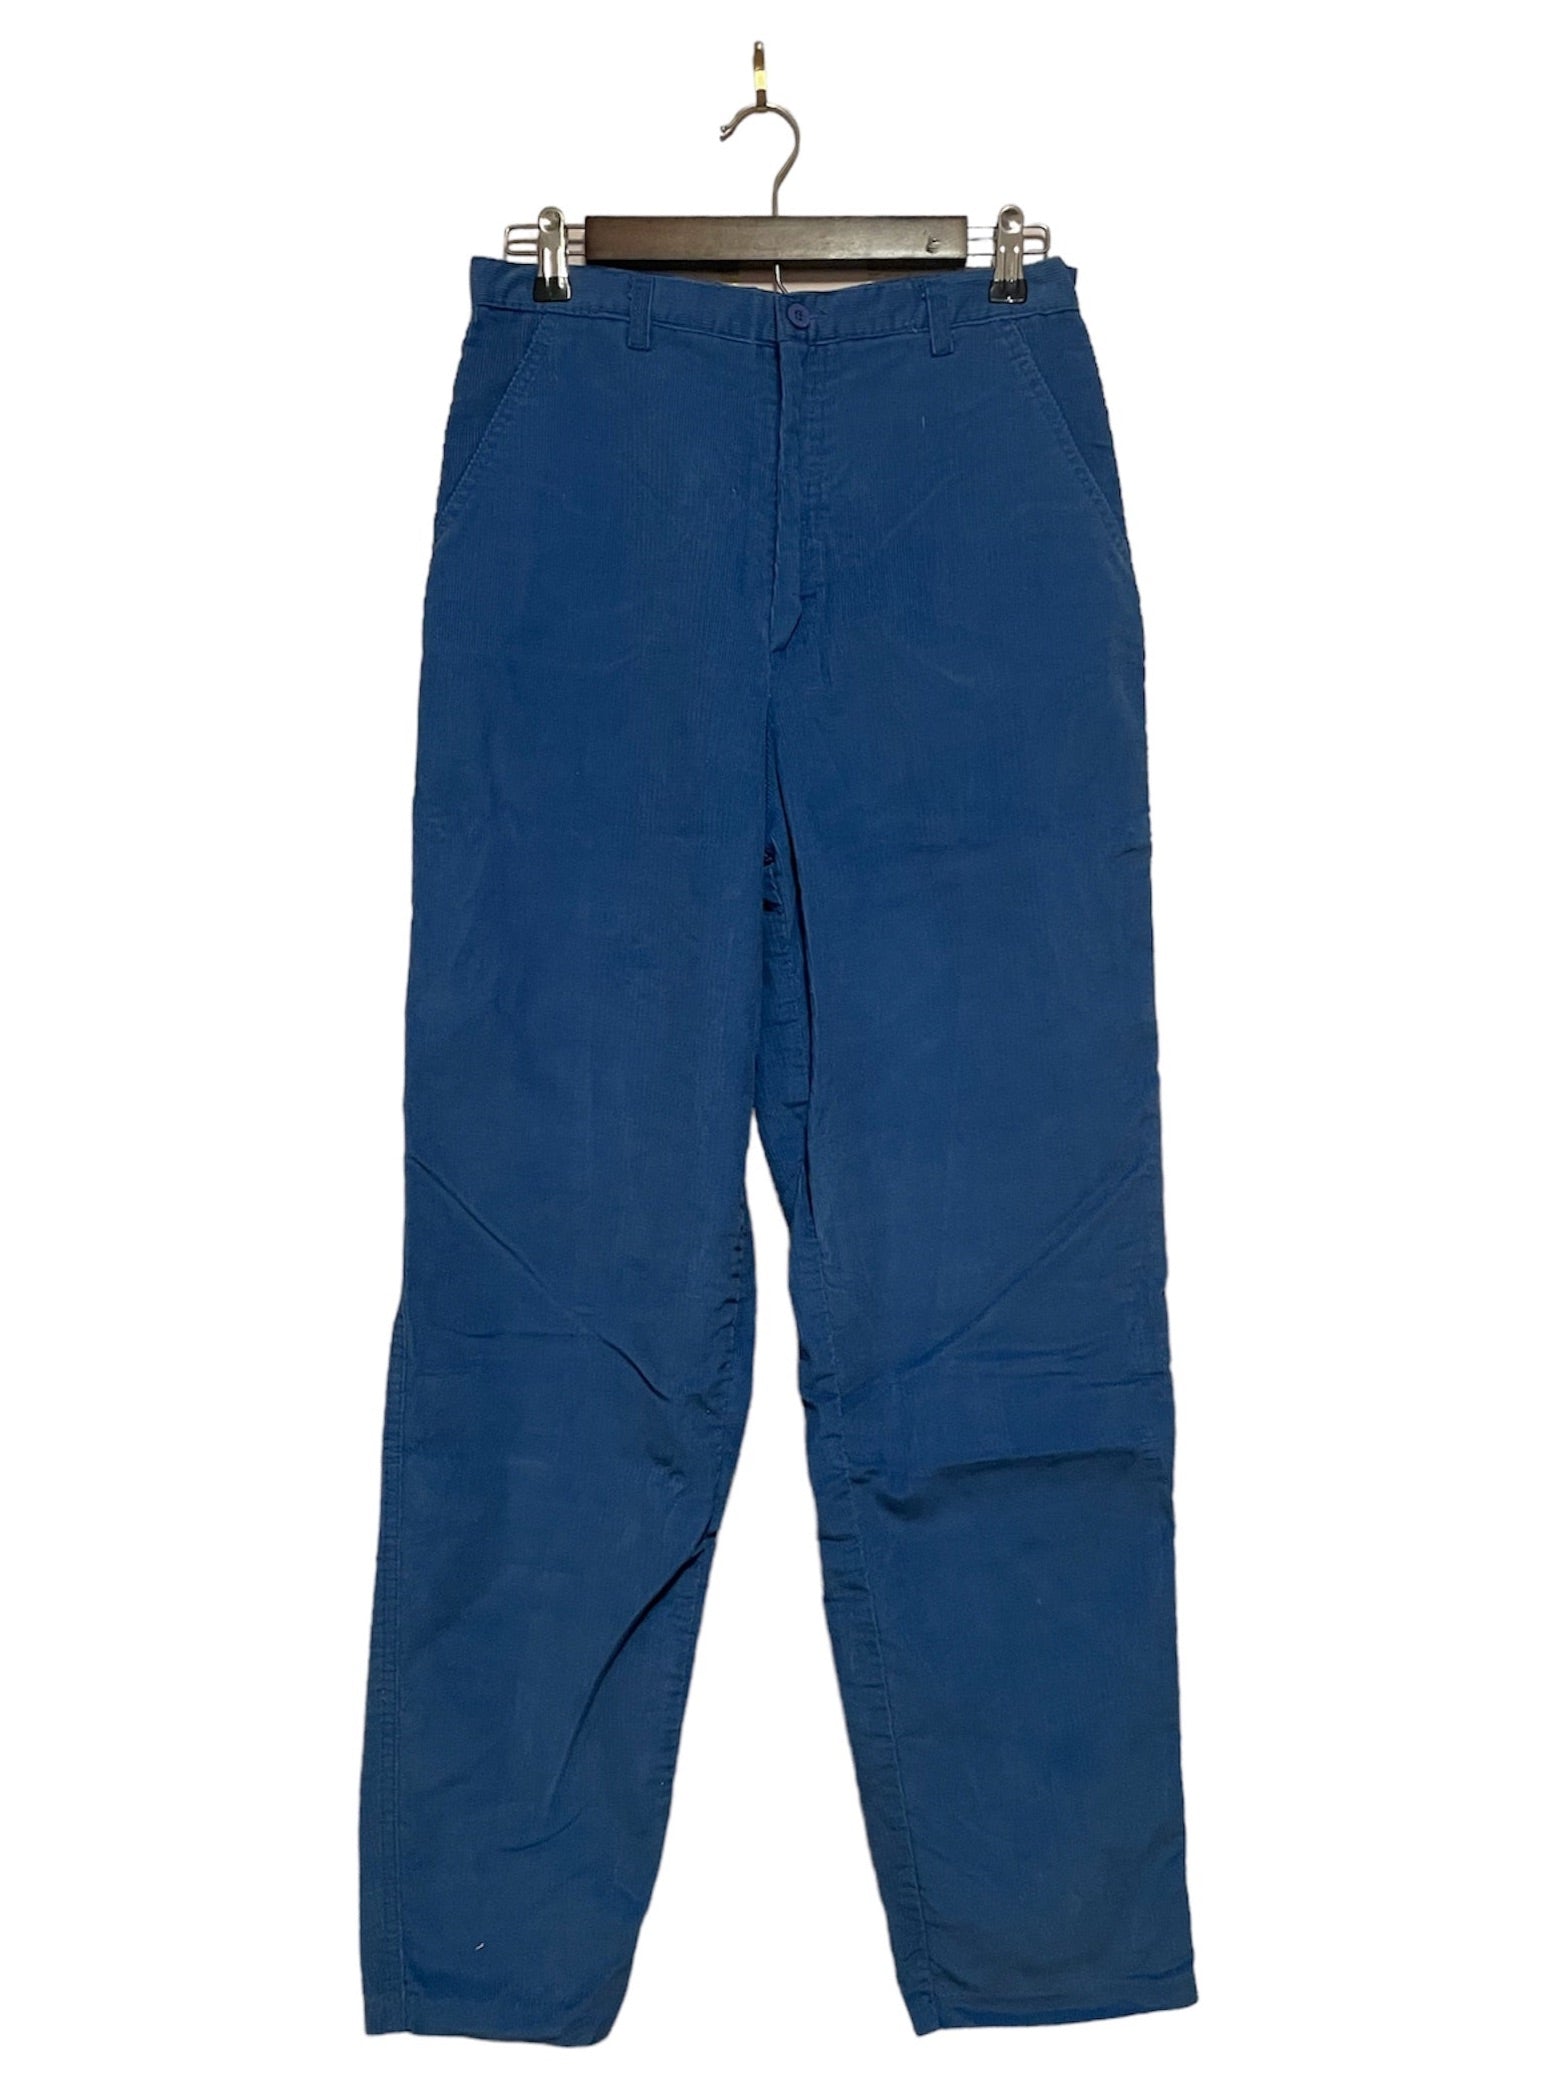 Oscar De La Renta Blue Corduroy Pant - Size: 28” waist